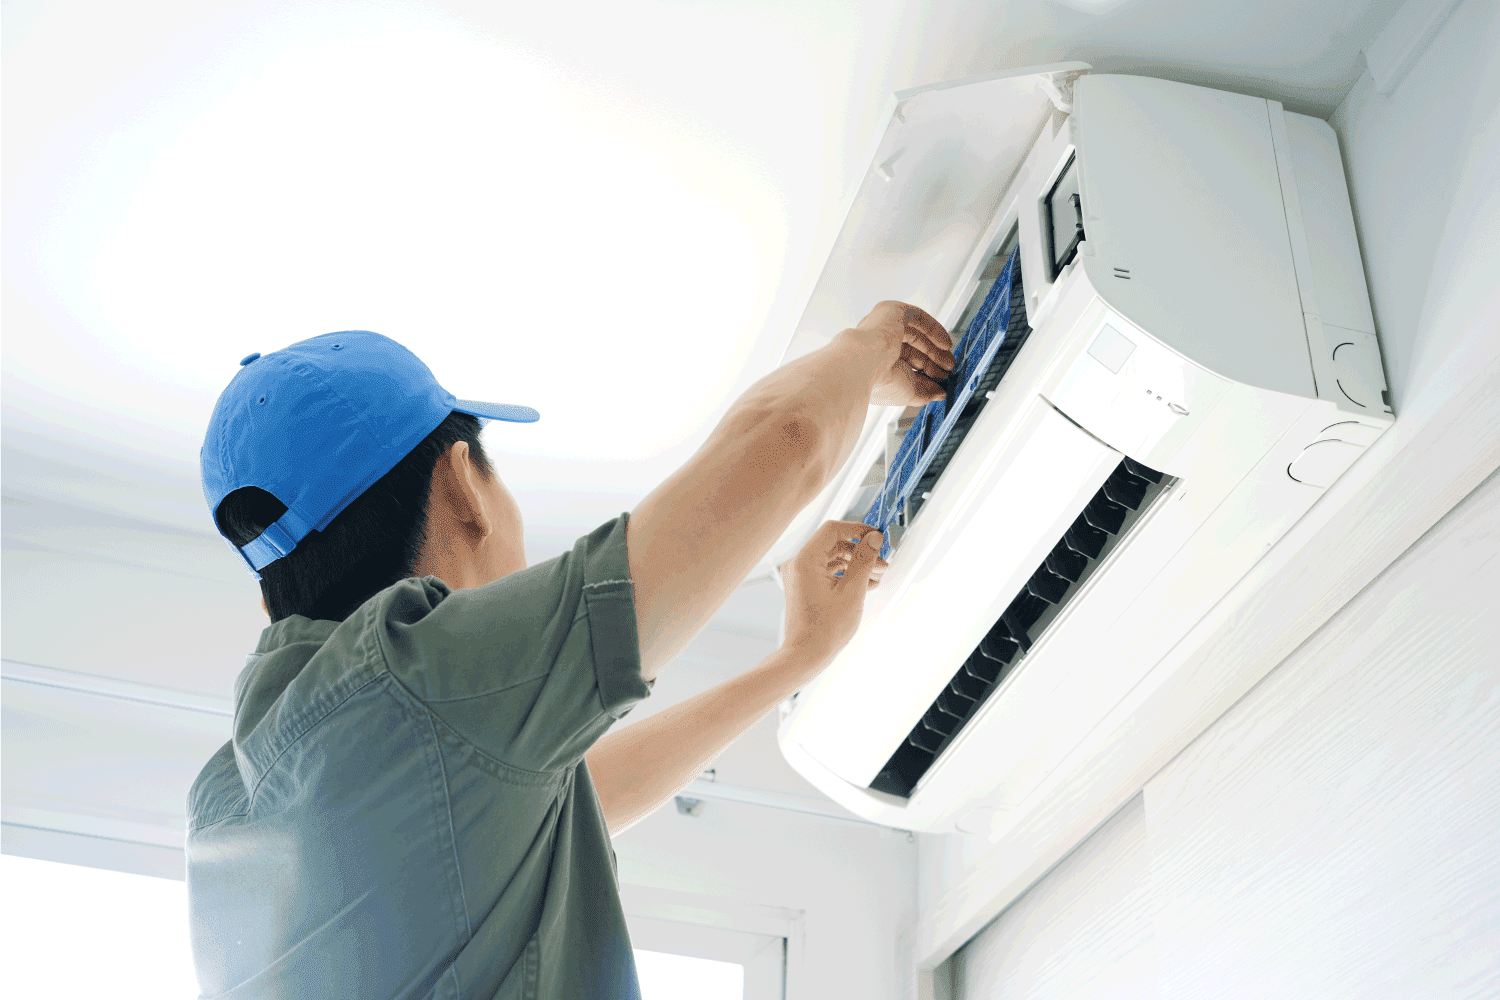 Male repairing air conditioner inside room